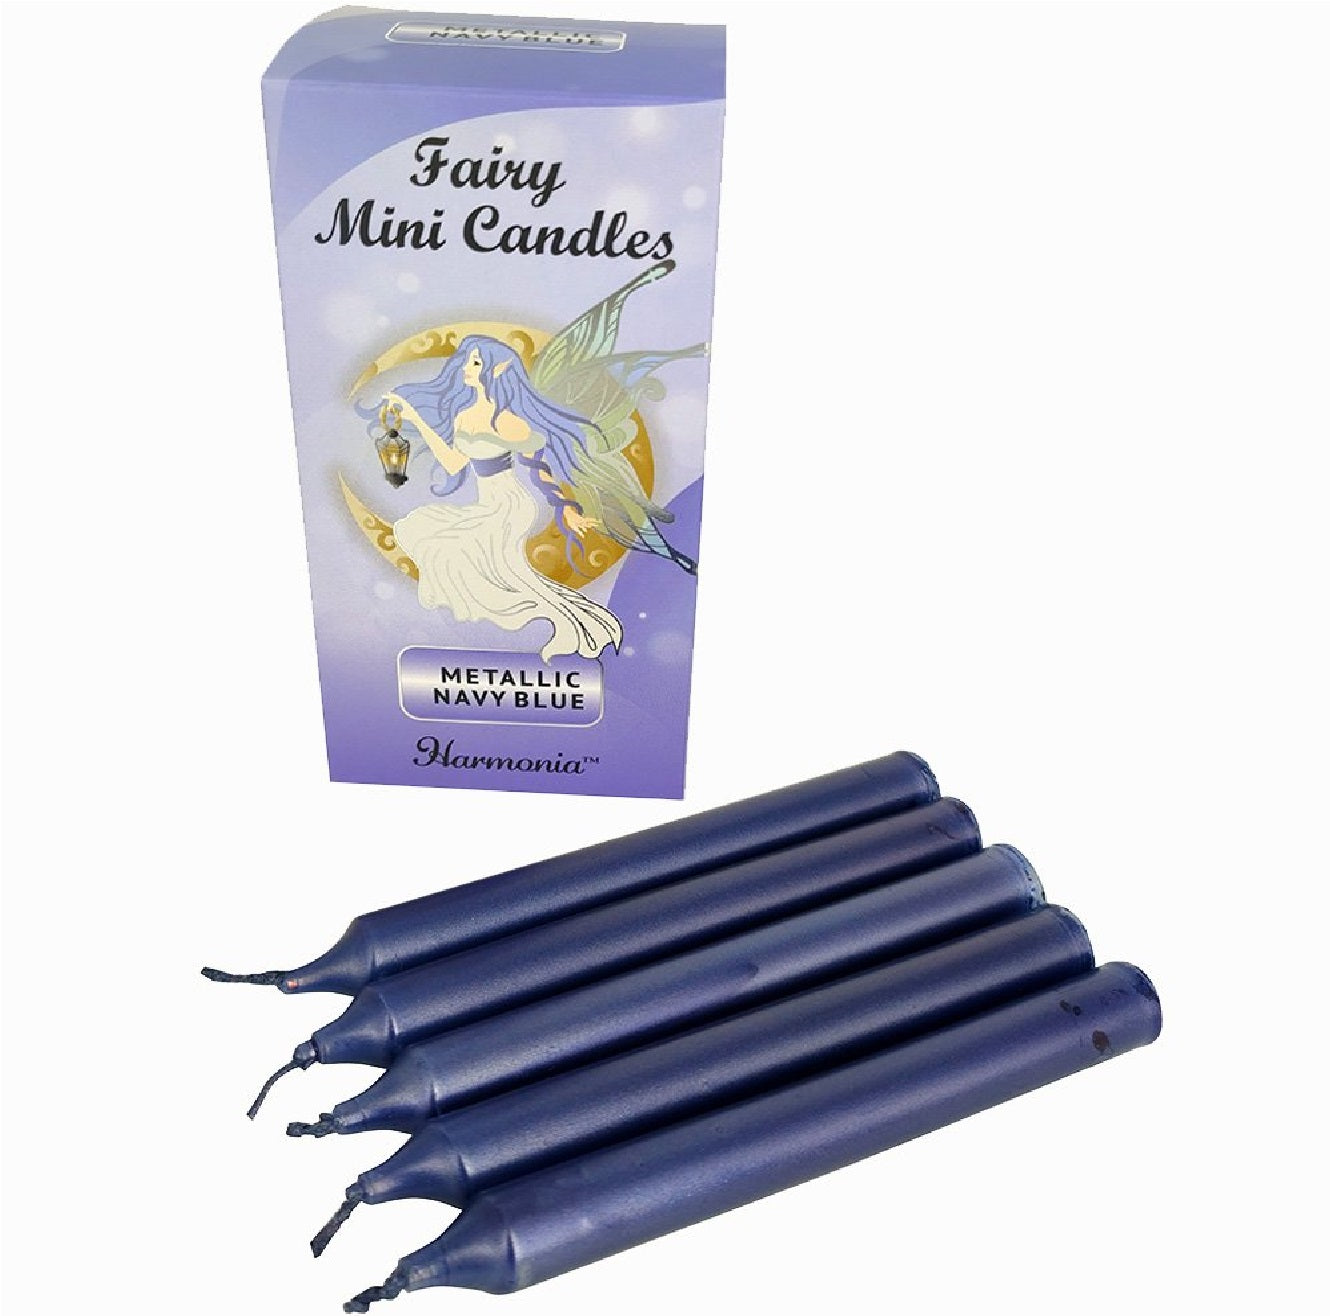 Fairy Mini Candles Metallic Navy Blue